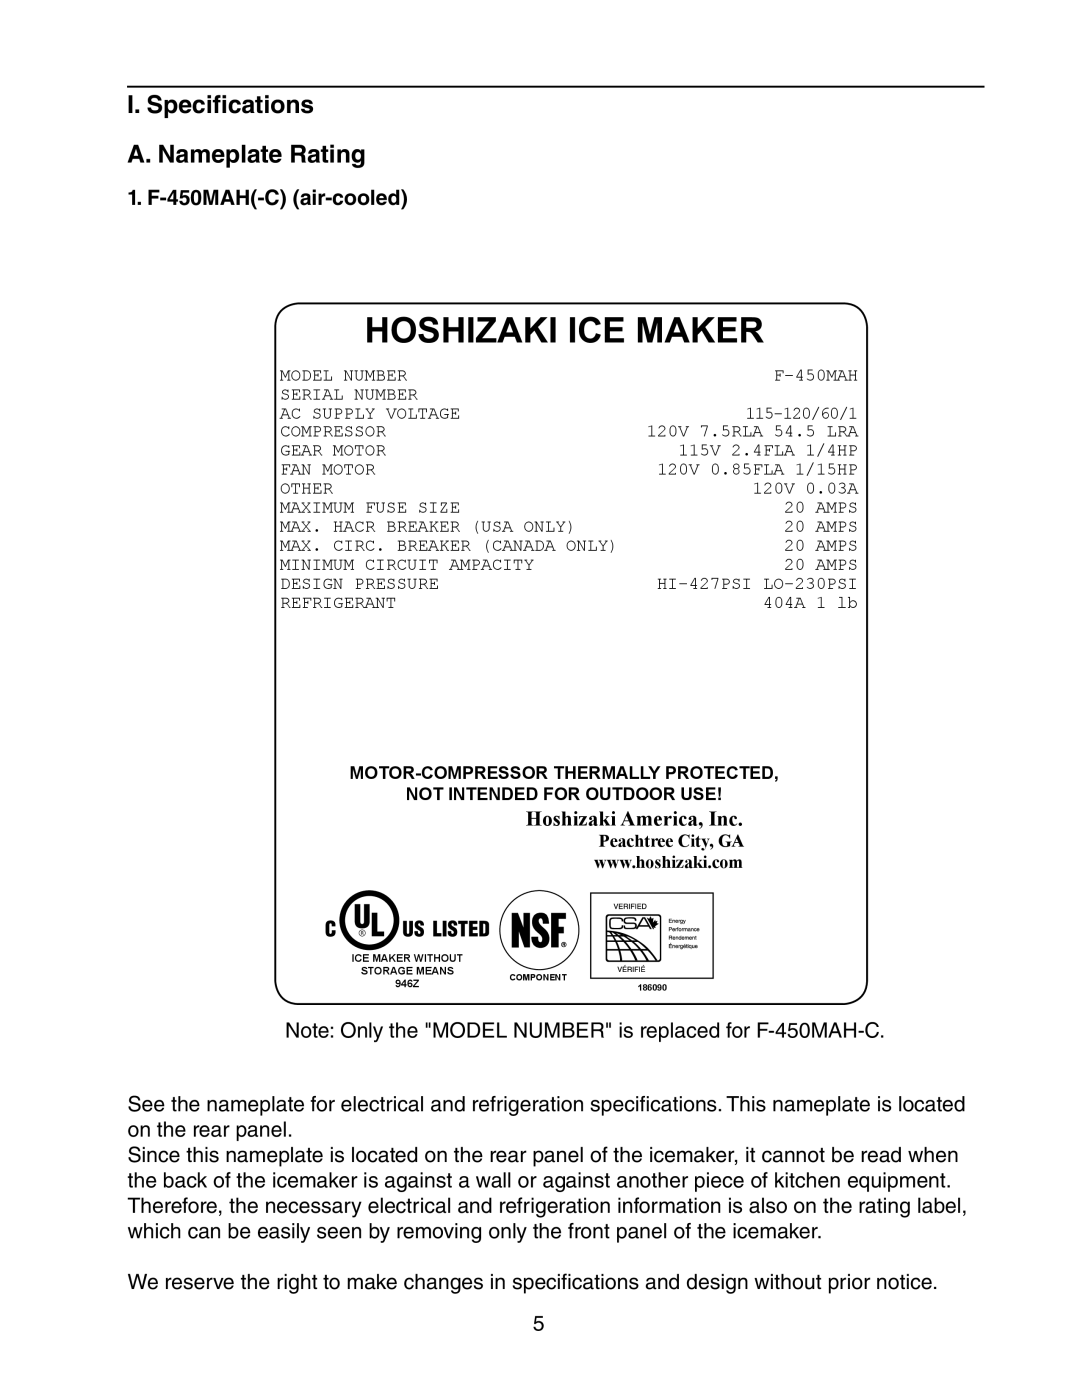 Hoshizaki F-450MAH(-C) I. Specifications A. Nameplate Rating, Hoshizaki Ice Maker, Hoshizaki America, Inc 